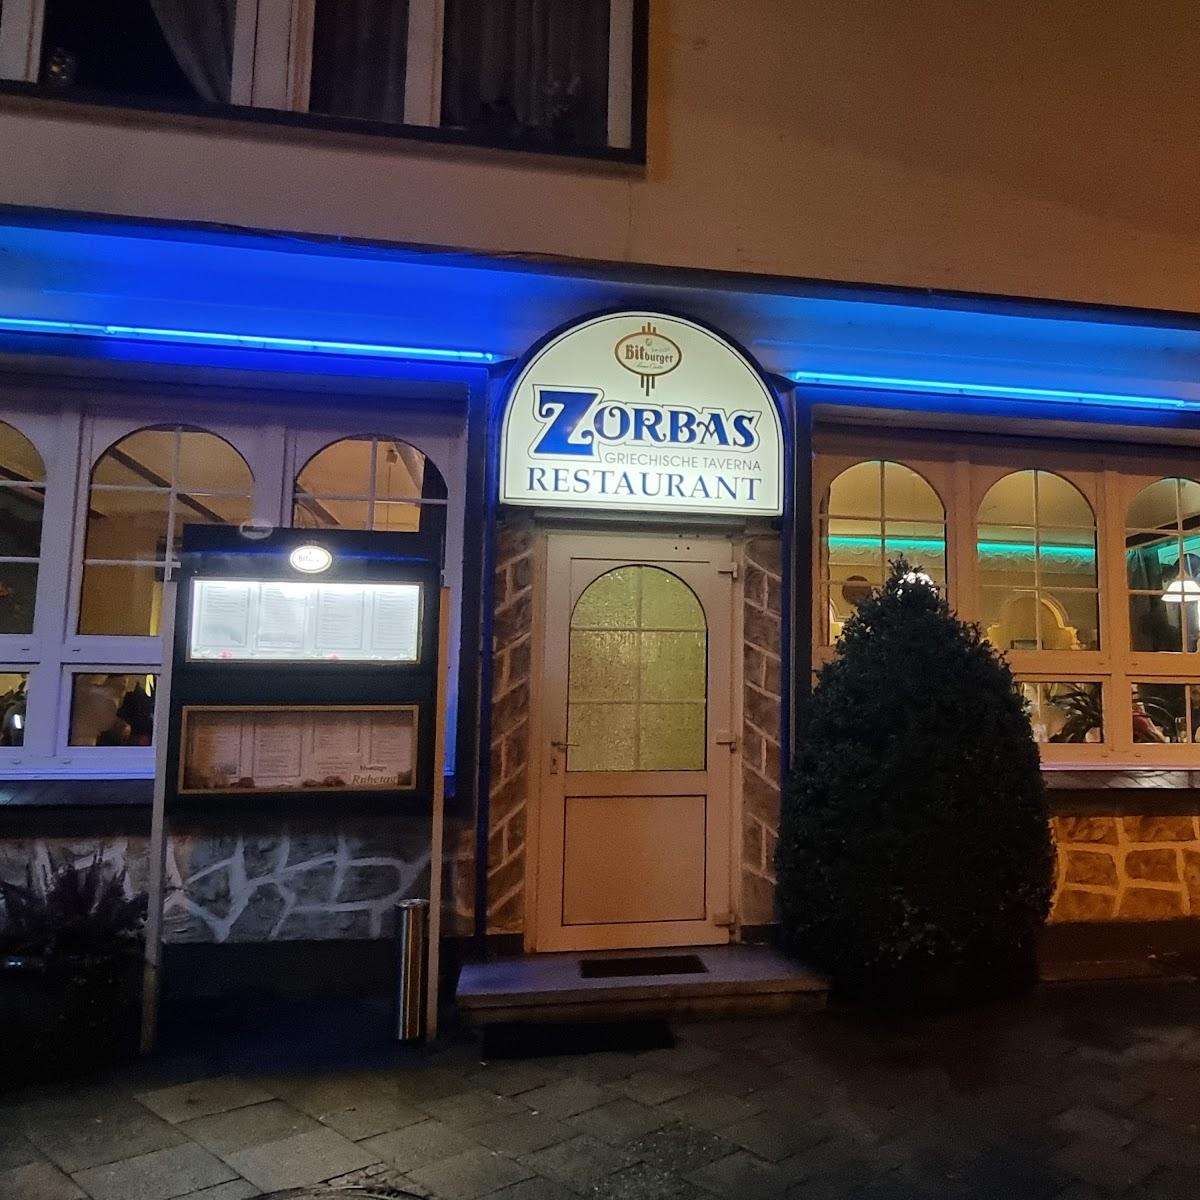 Restaurant "Zorbas" in Osnabrück